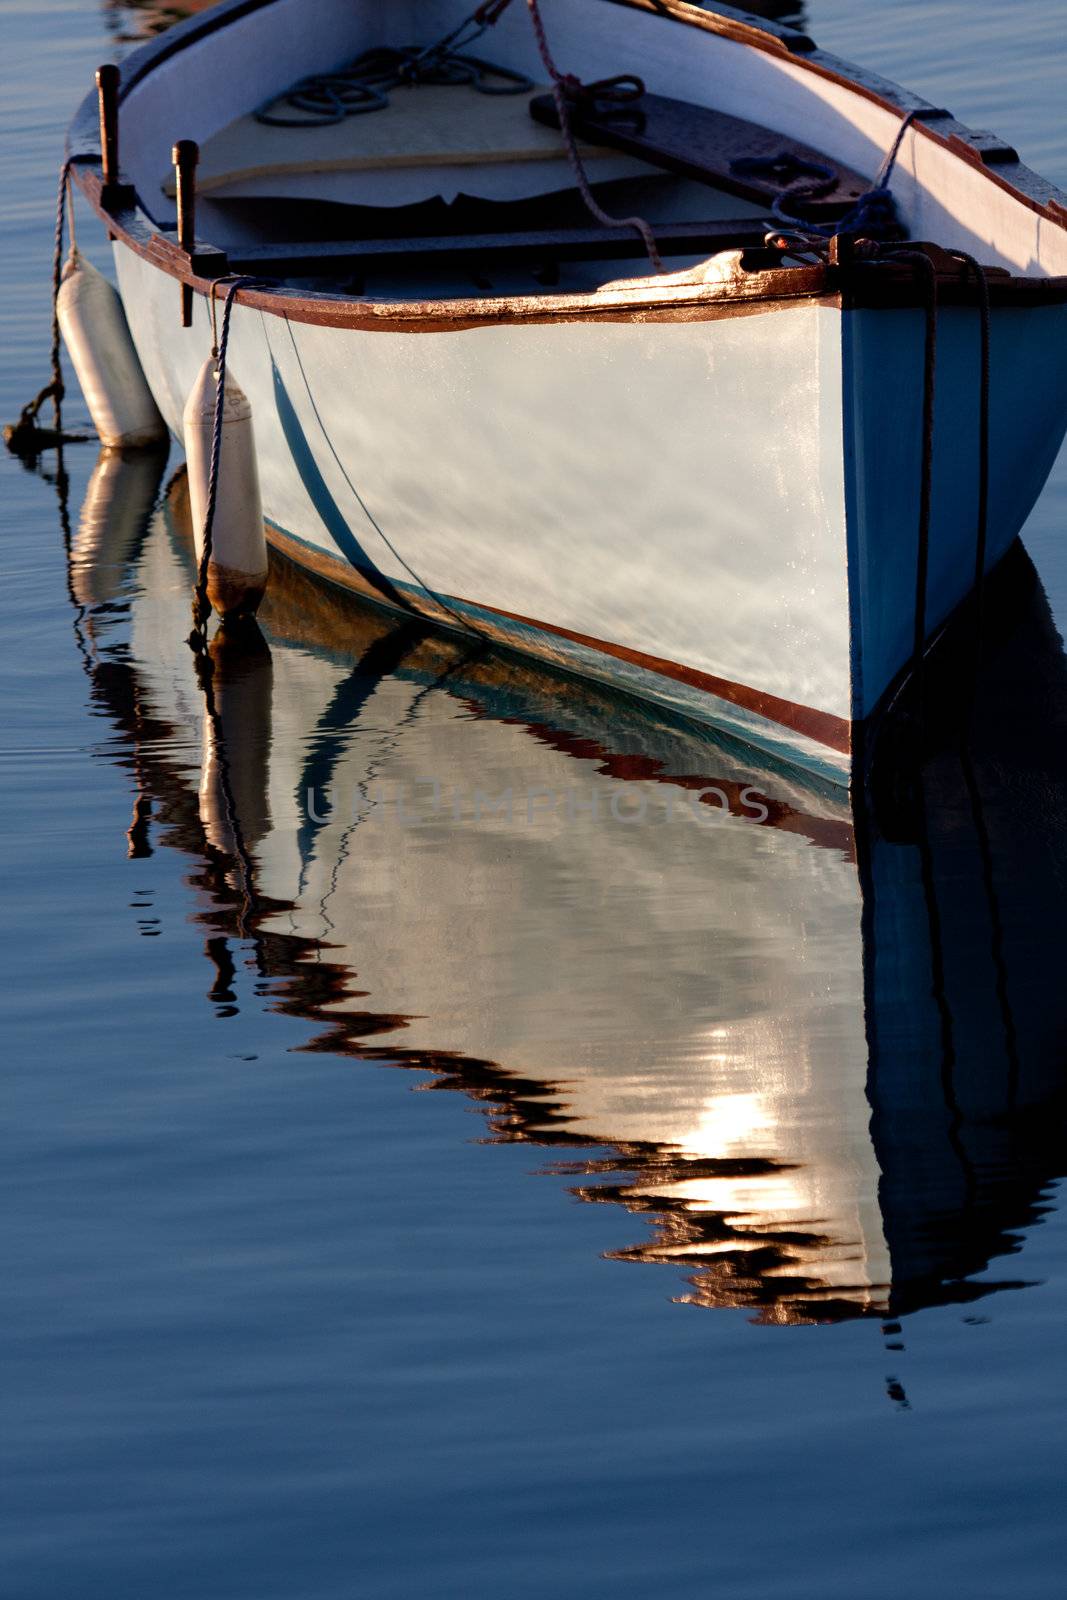 Morning light on a grey boat at anchor